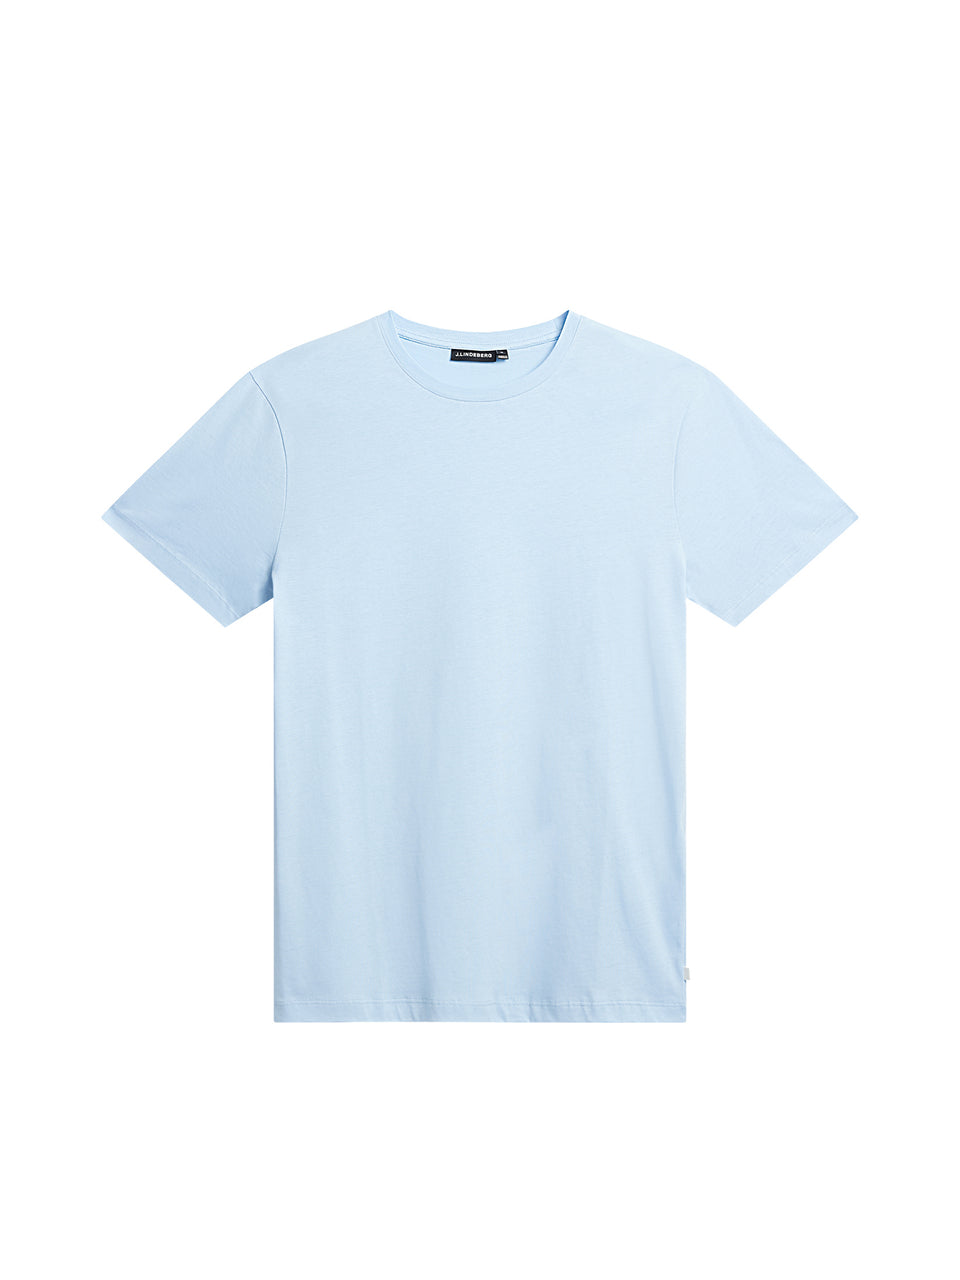 Sid Basic T-Shirt / Chambray Blue